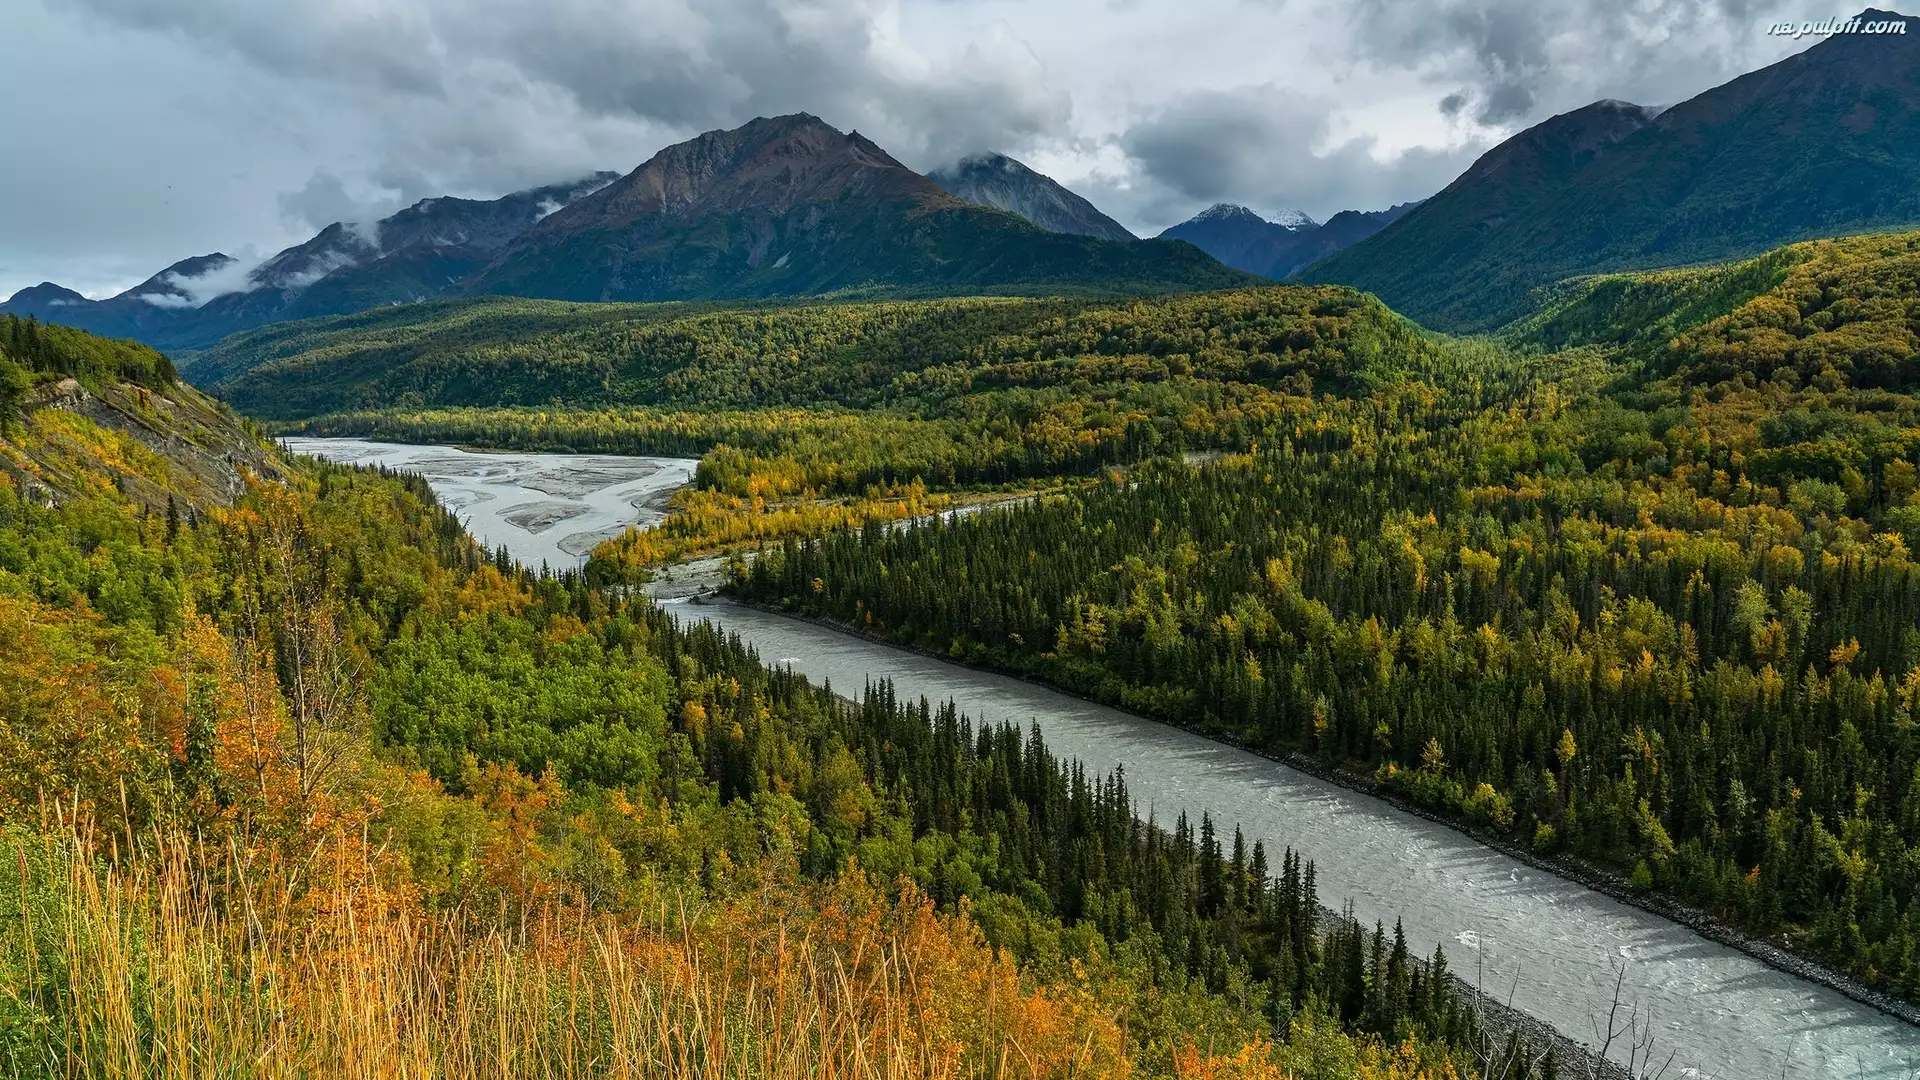 Chickaloon, Góry, Matanuska River, Alaska, Chugach Mountains, Drzewa, Stany Zjednoczone, Rzeka